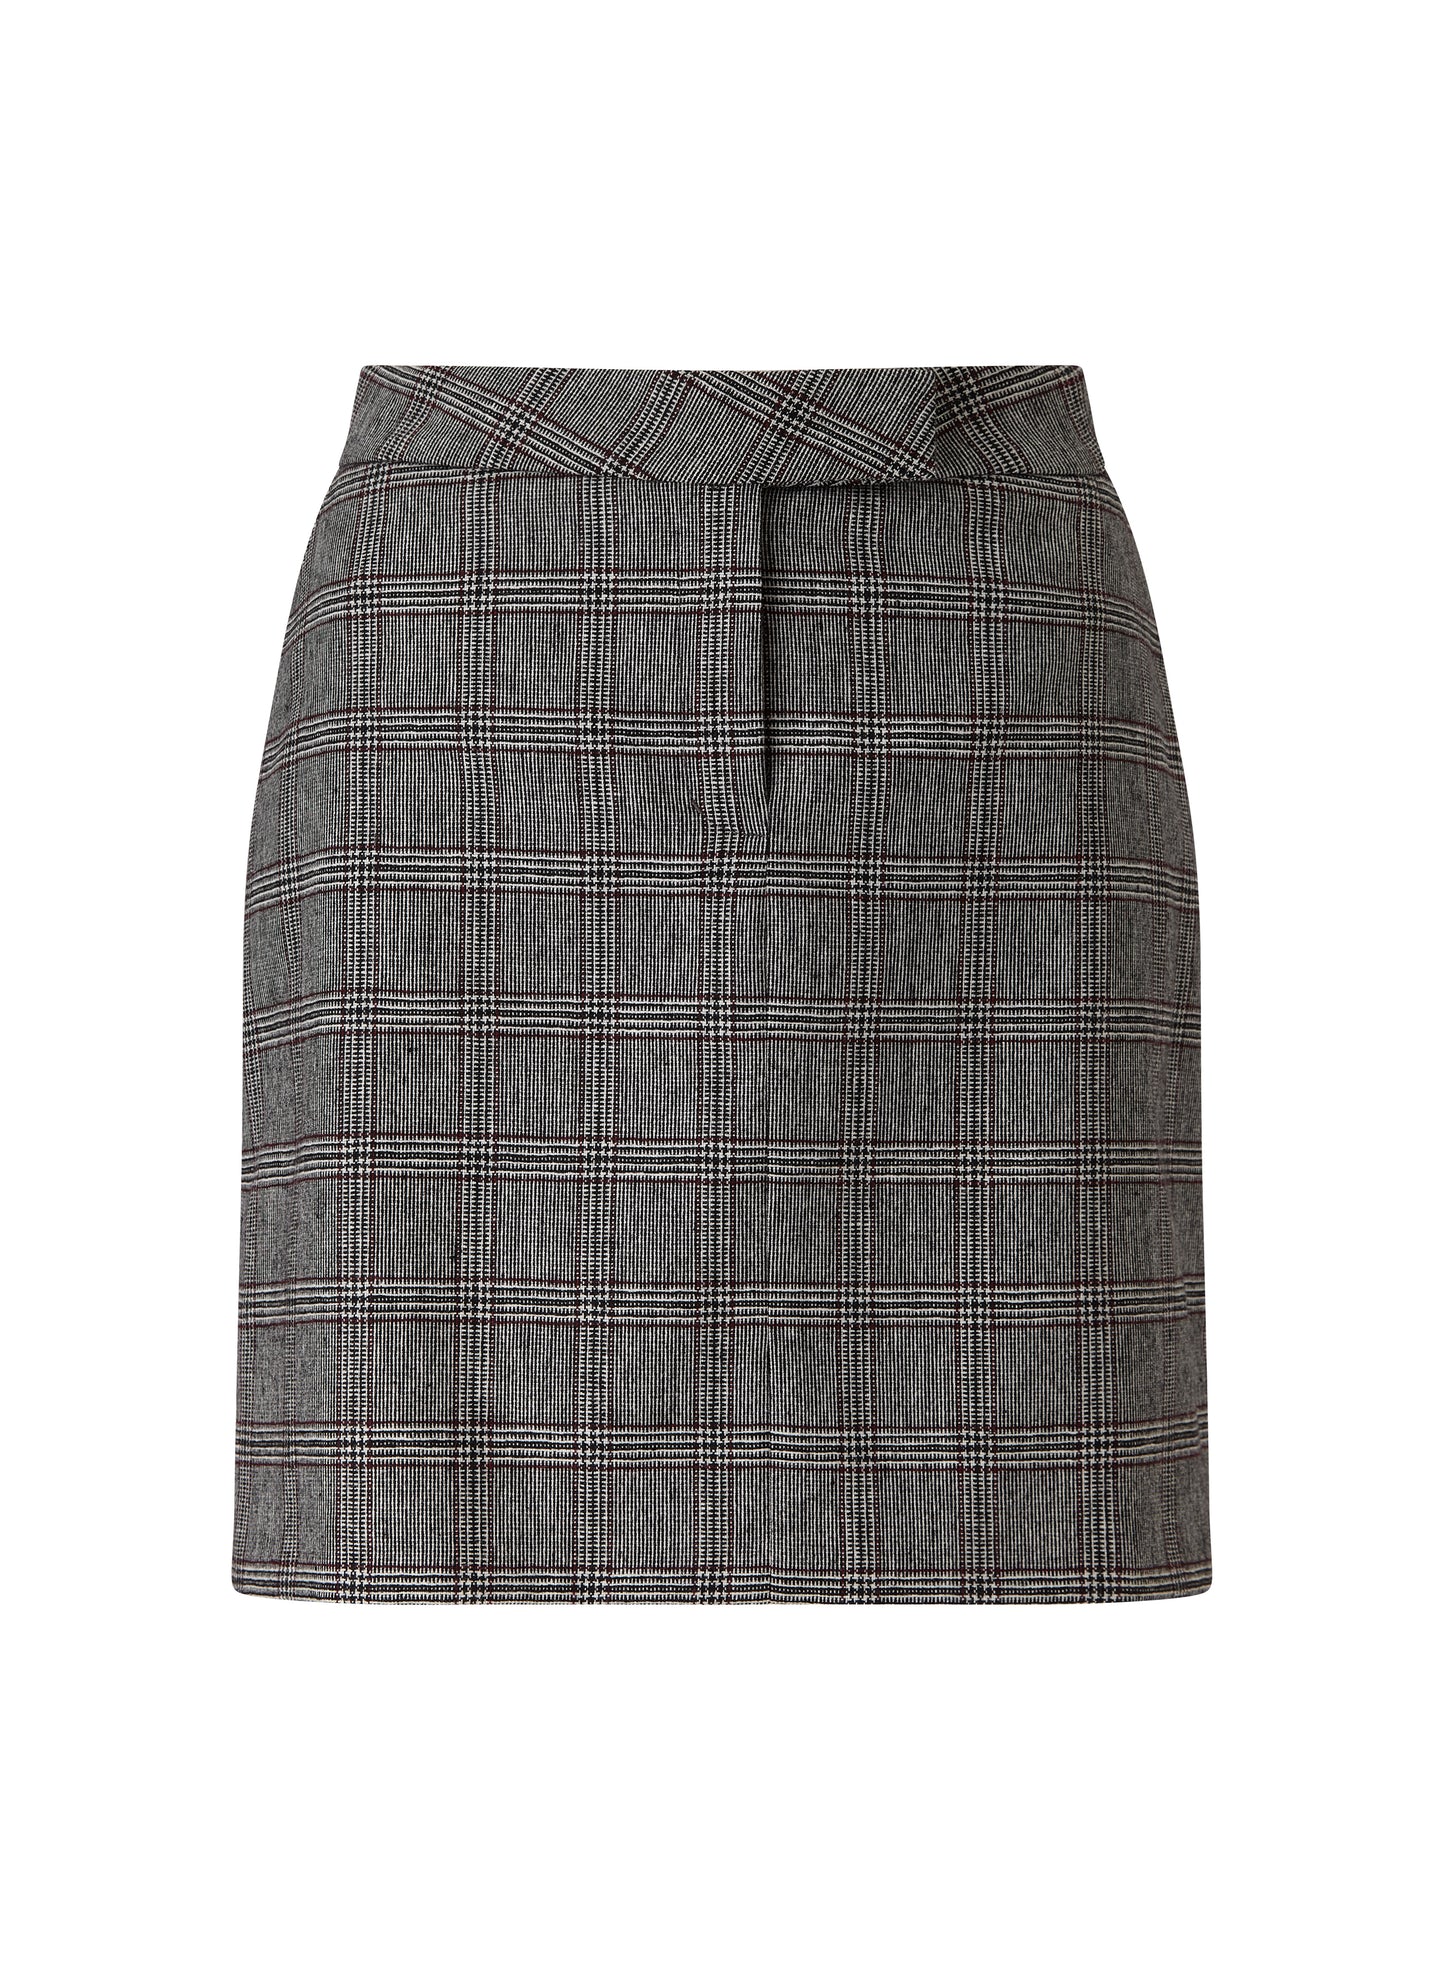 Mallory Checkered Skirt